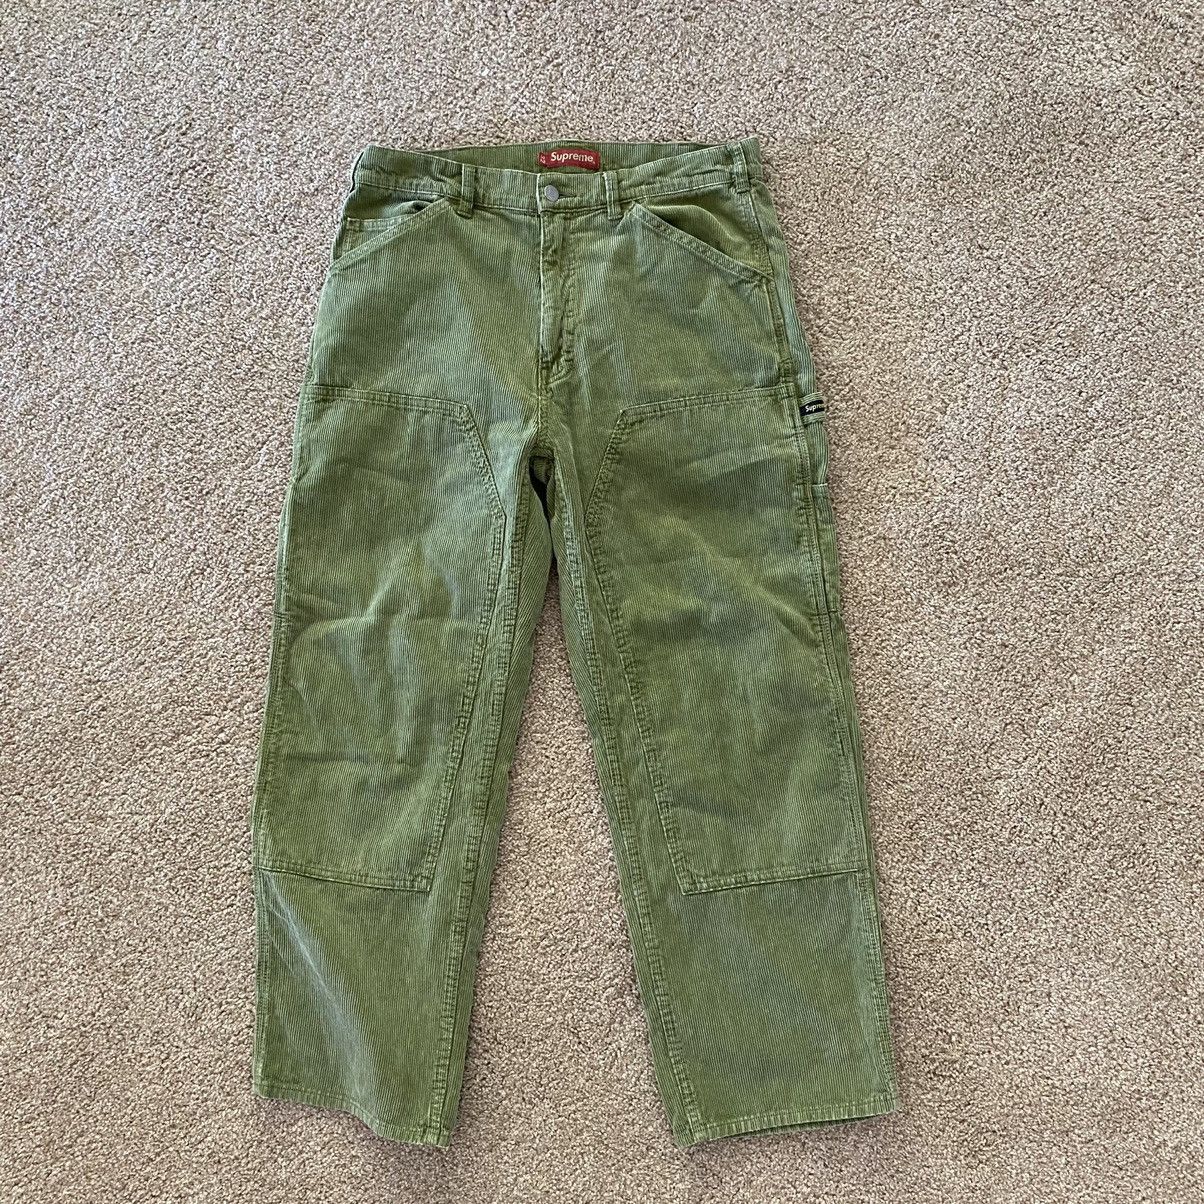 Supreme Supreme Green Corduroy Double Knee Pants | Grailed